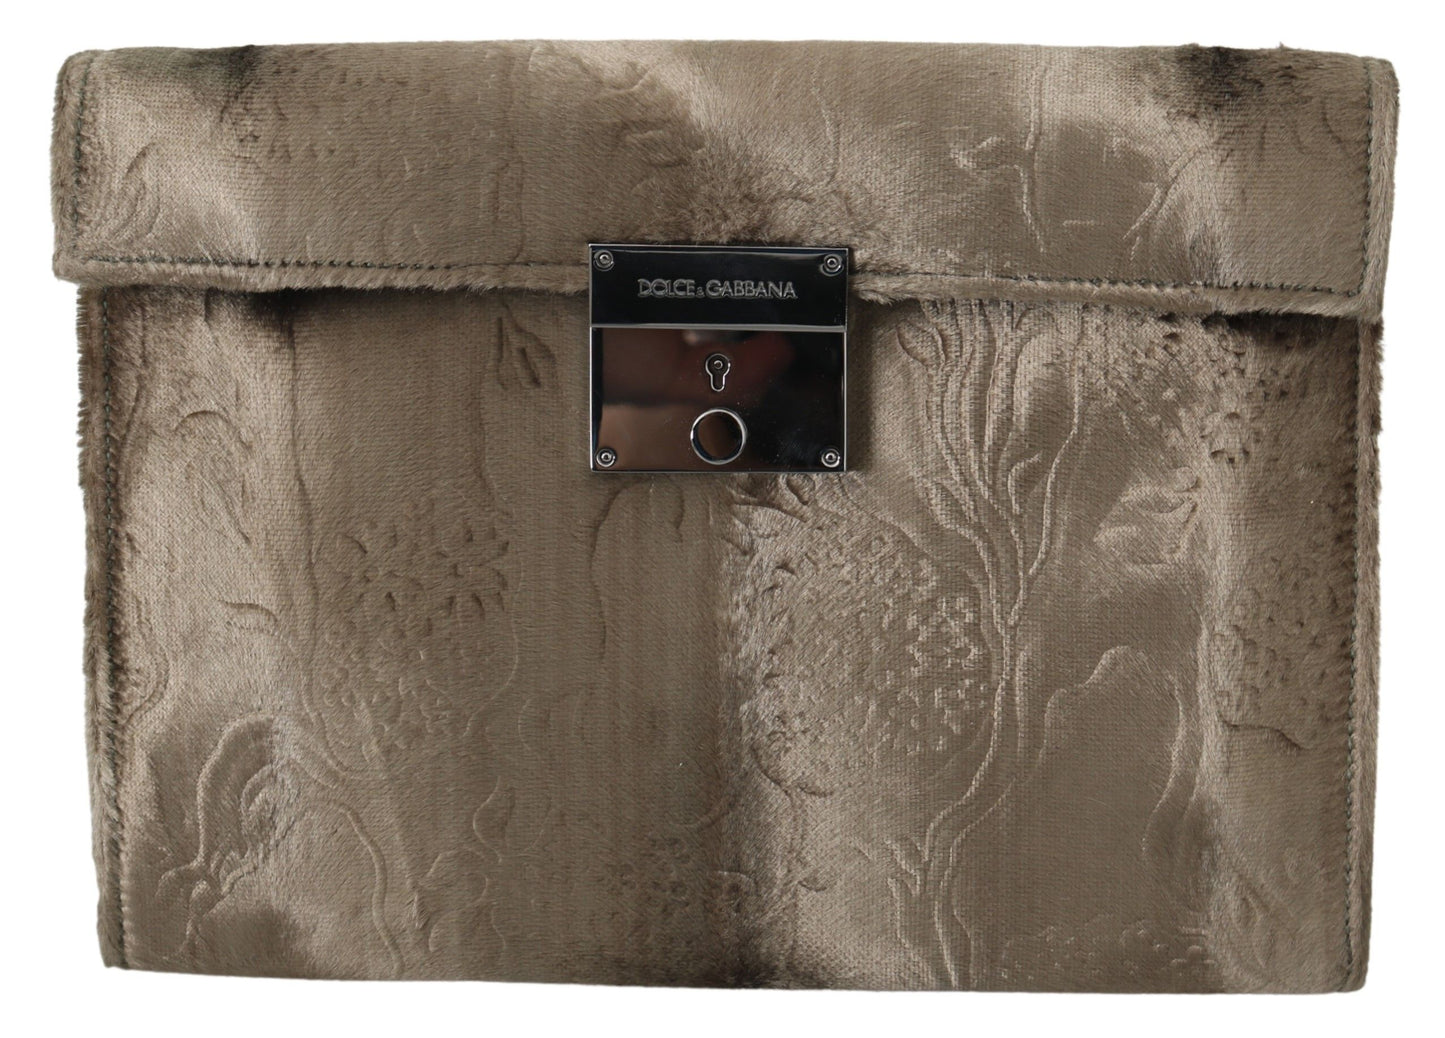 Dolce & Gabbana Beige Velvet Floral Leather Men Document Casecase